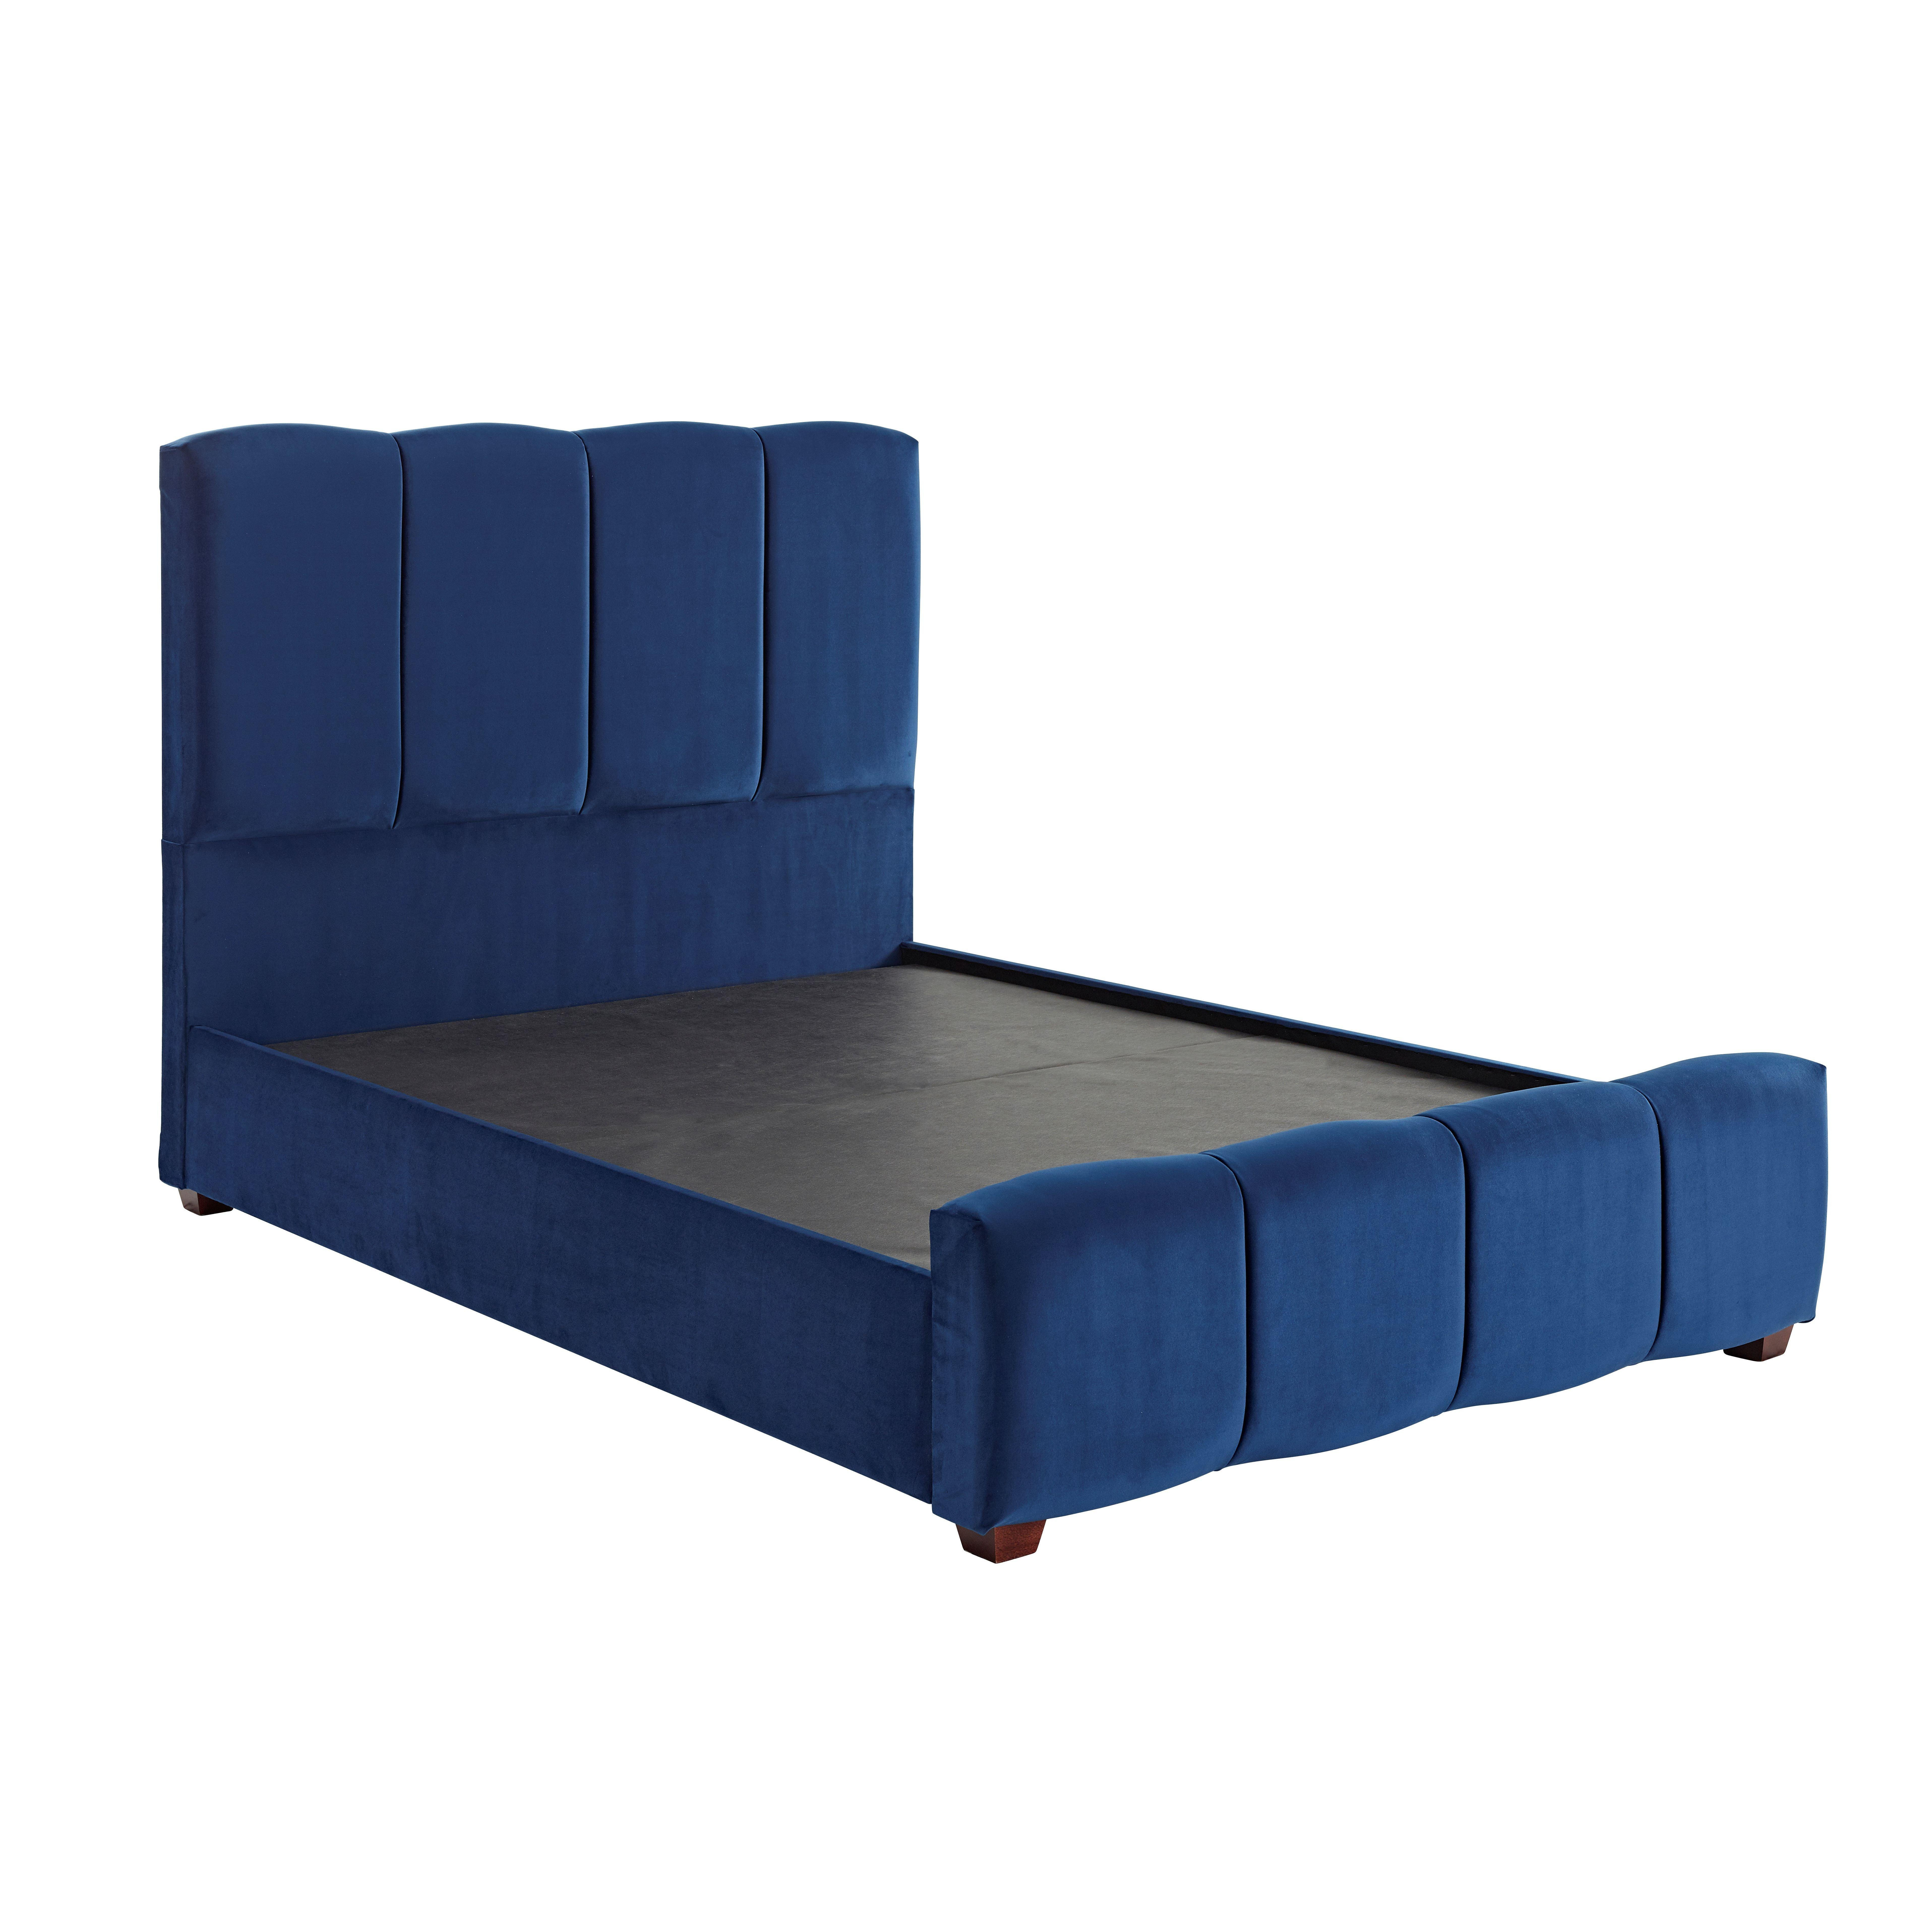 Claire Panel Crushed Velvet Luxurious Upholstered Bed Frame Marine Blue - image 1